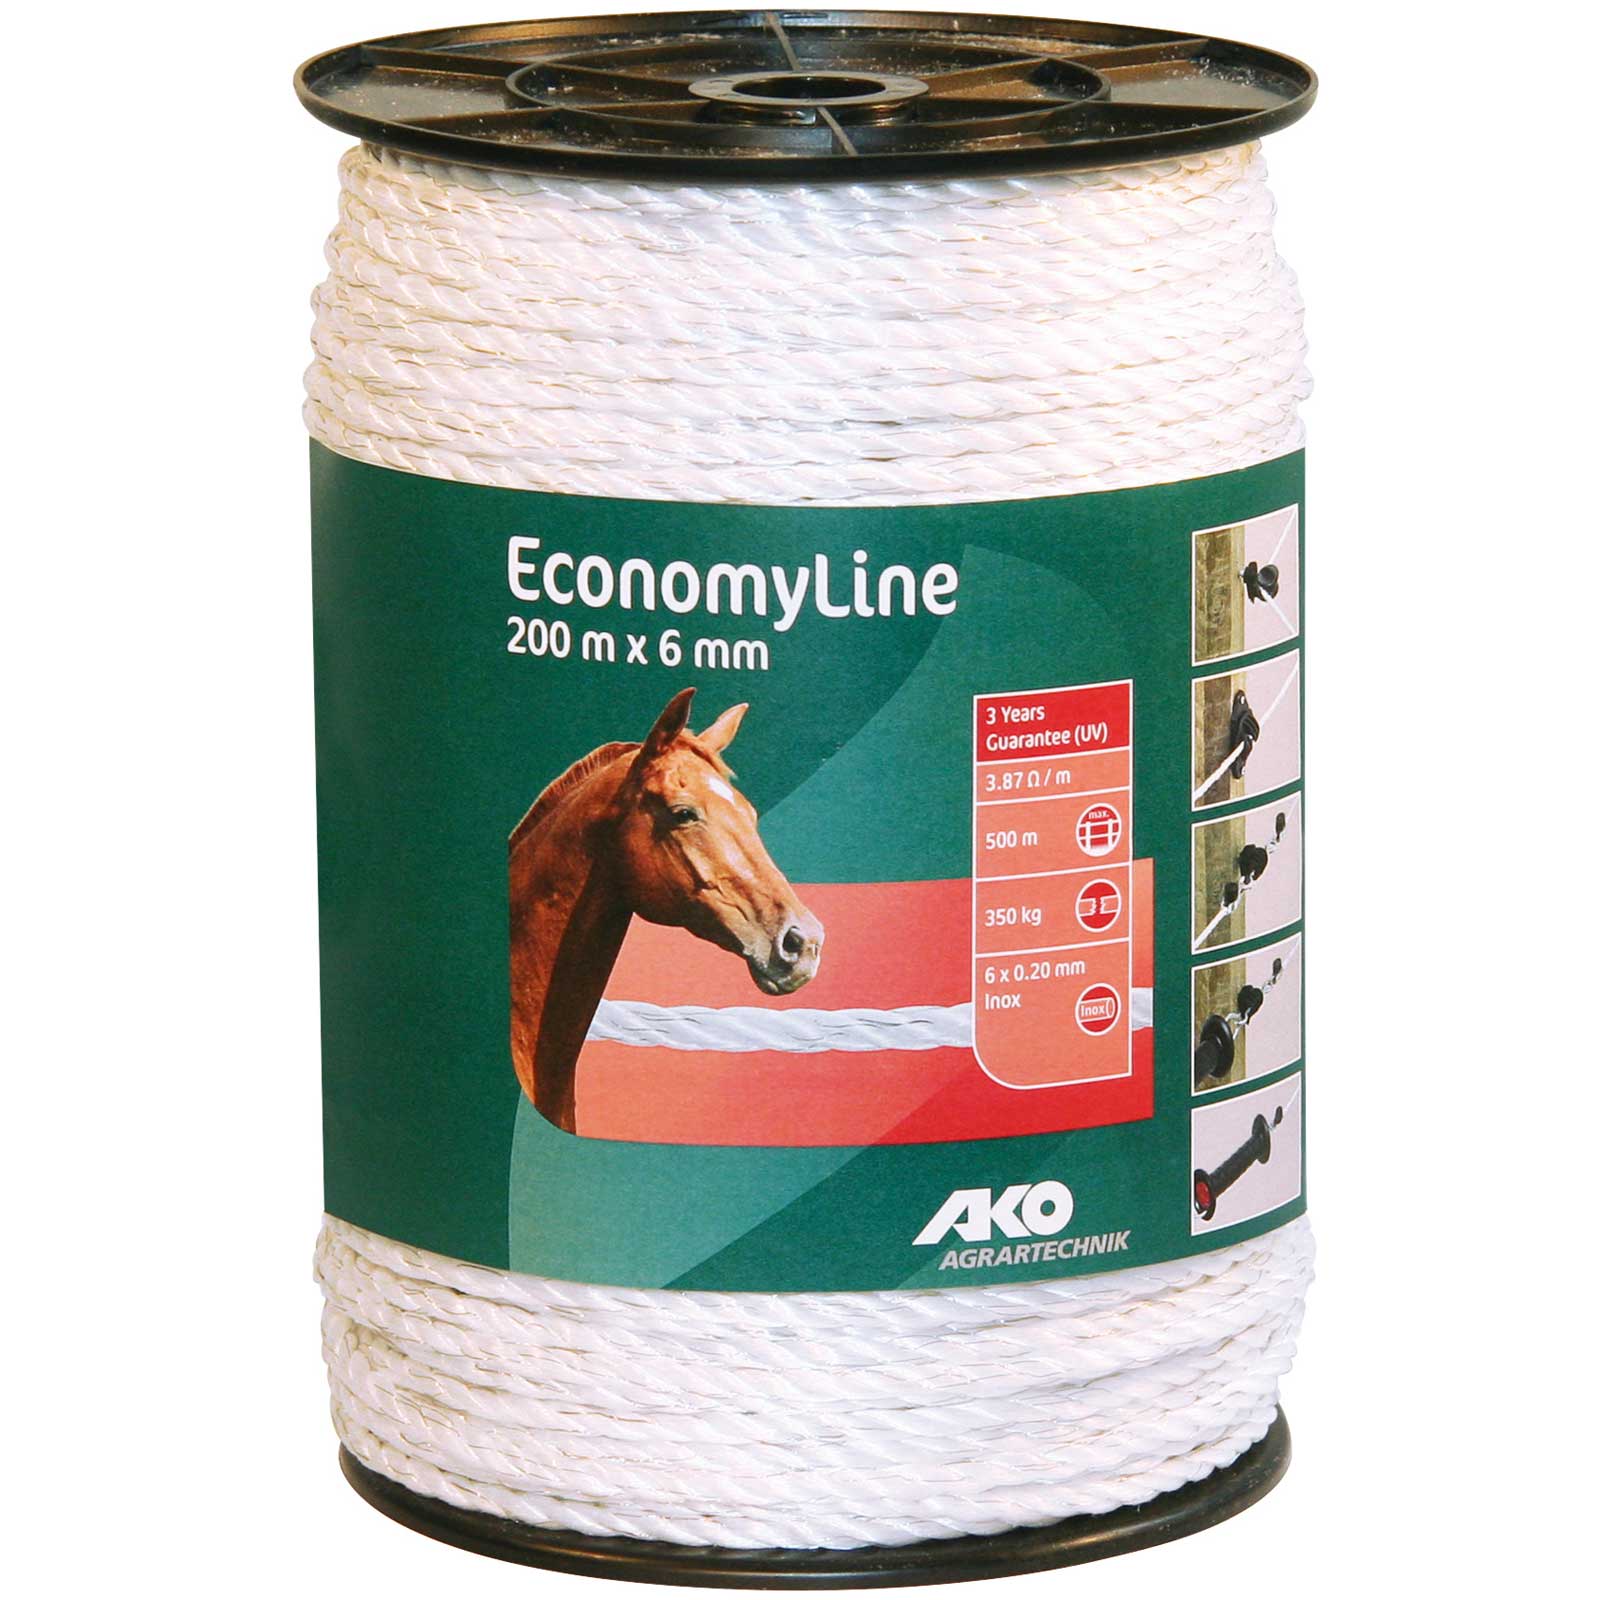 Ako Pasture Fence Rope EconomyLine 6x0.20 Niro, white